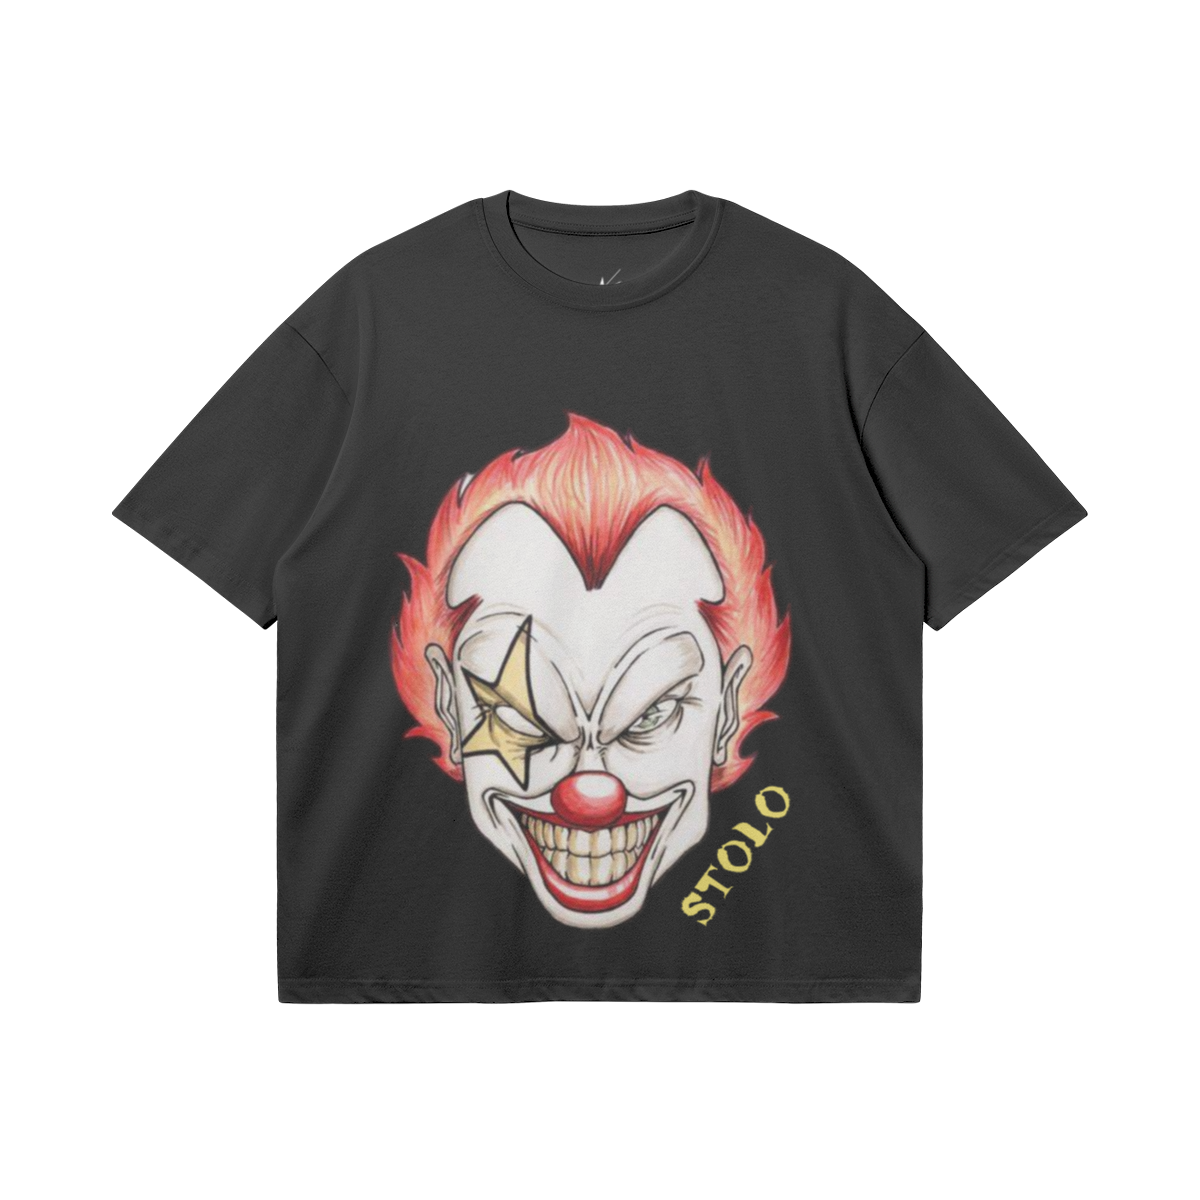 Stolo Clothing Co Evil Clown Tee